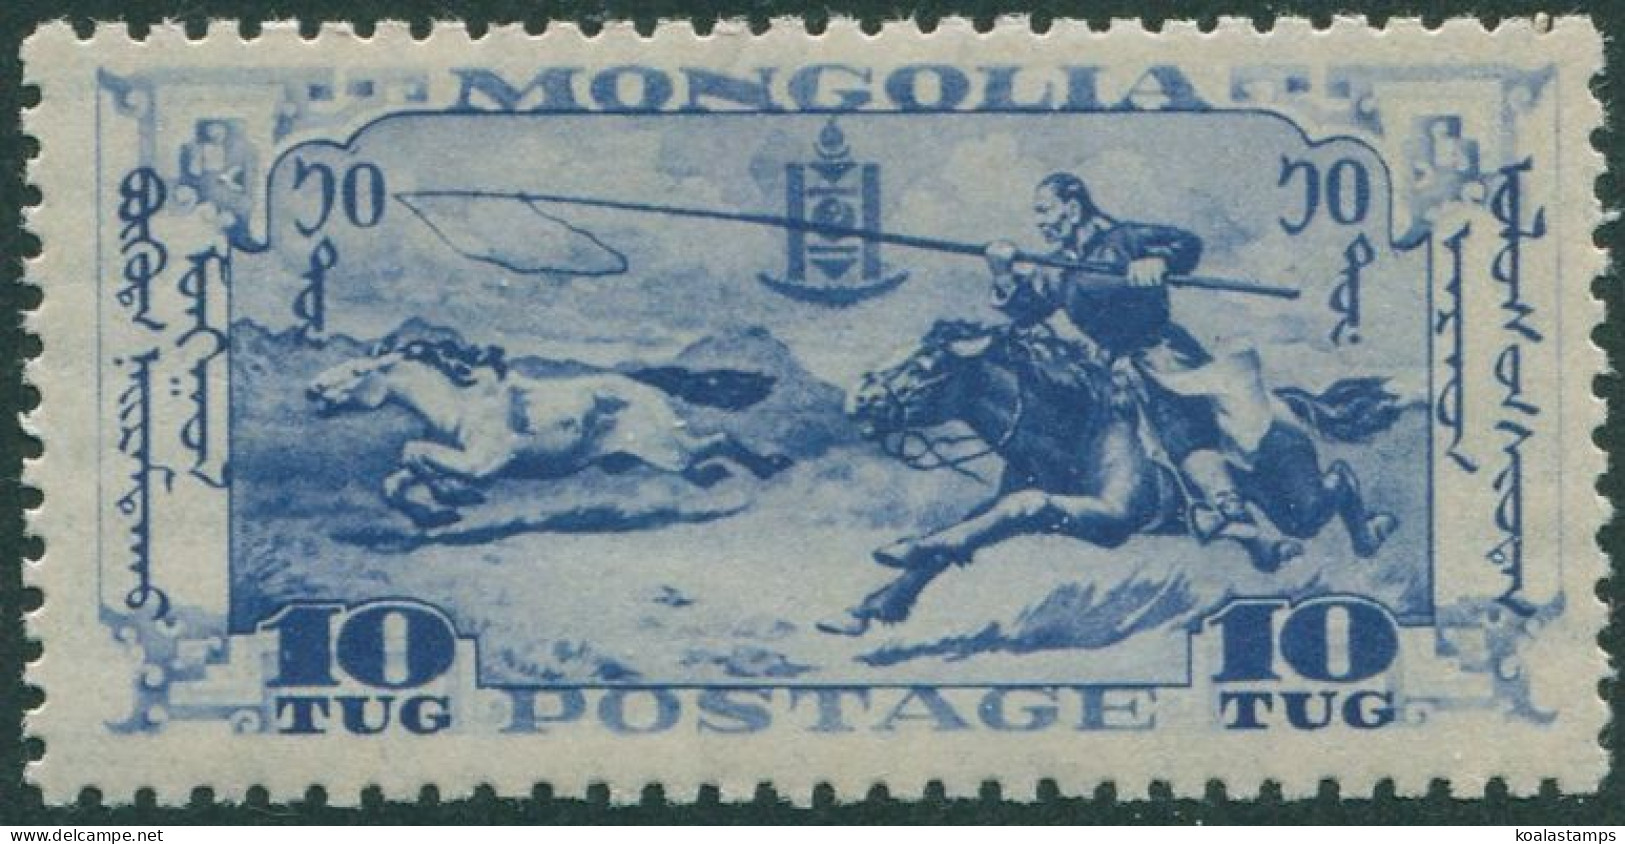 Mongolia 1932 SG58 10t Lassoing Wild Horses Painting MNH - Mongolie